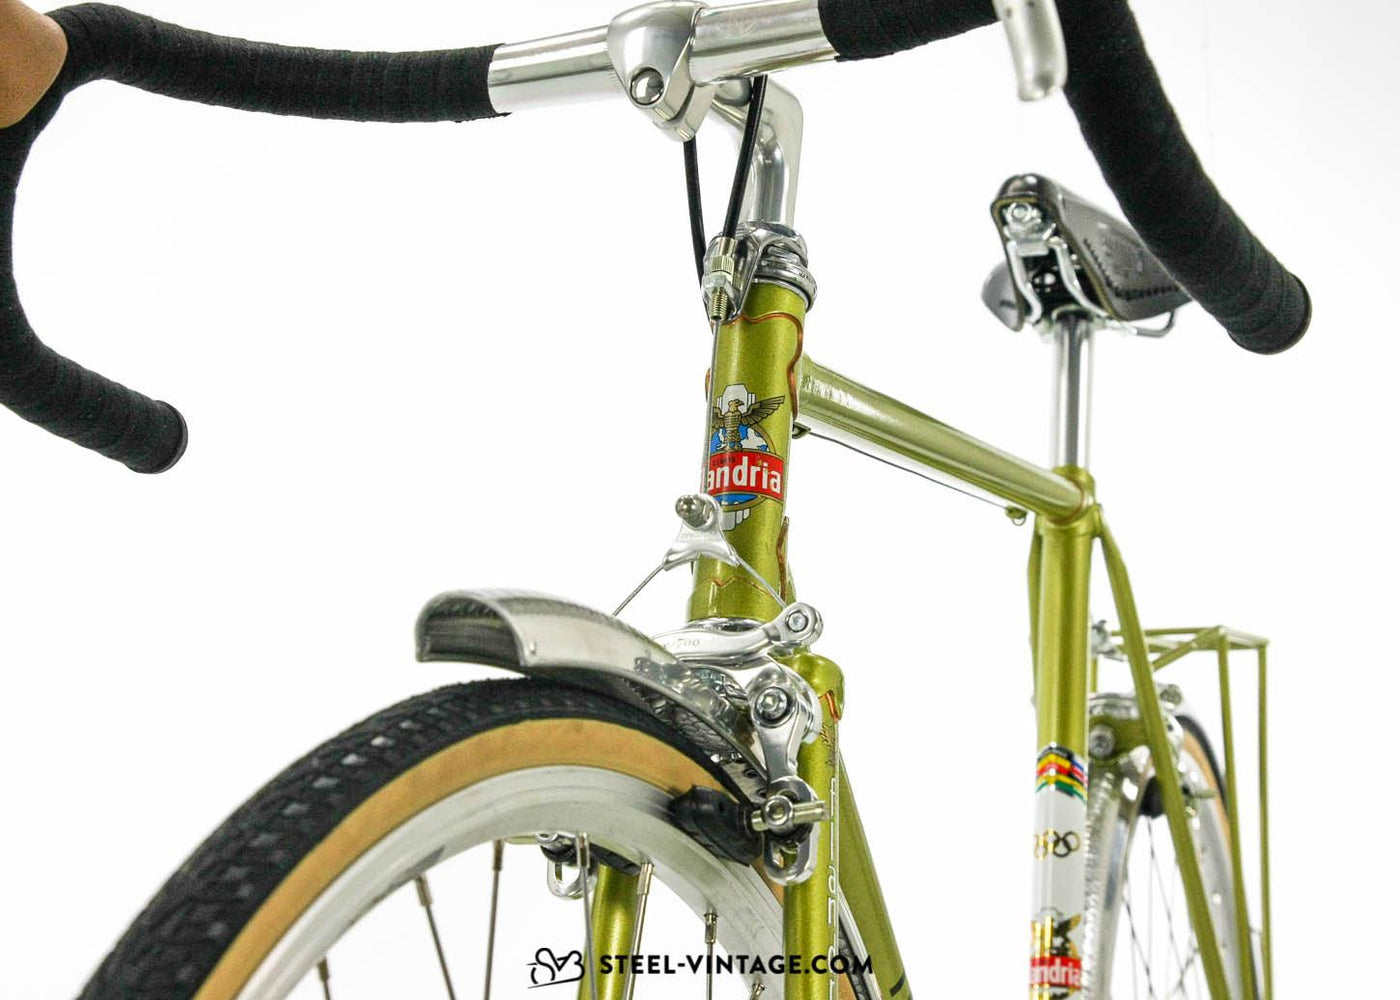 Flandria Randonneur Touring Bicycle NOS 1970s - Steel Vintage Bikes